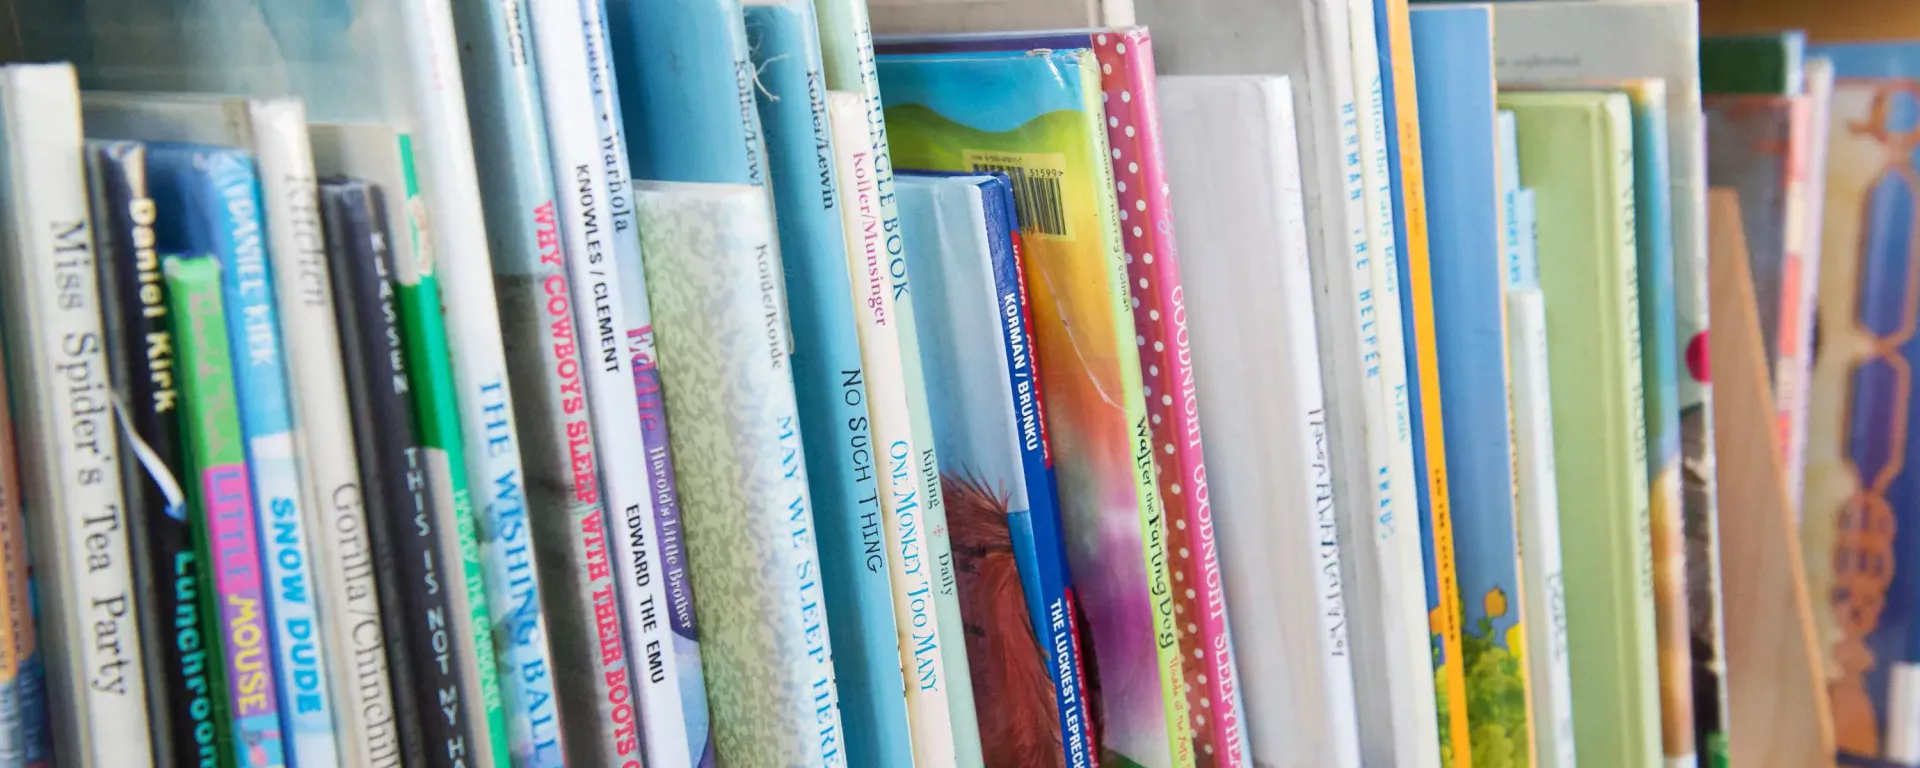 image of kids books on the shelf